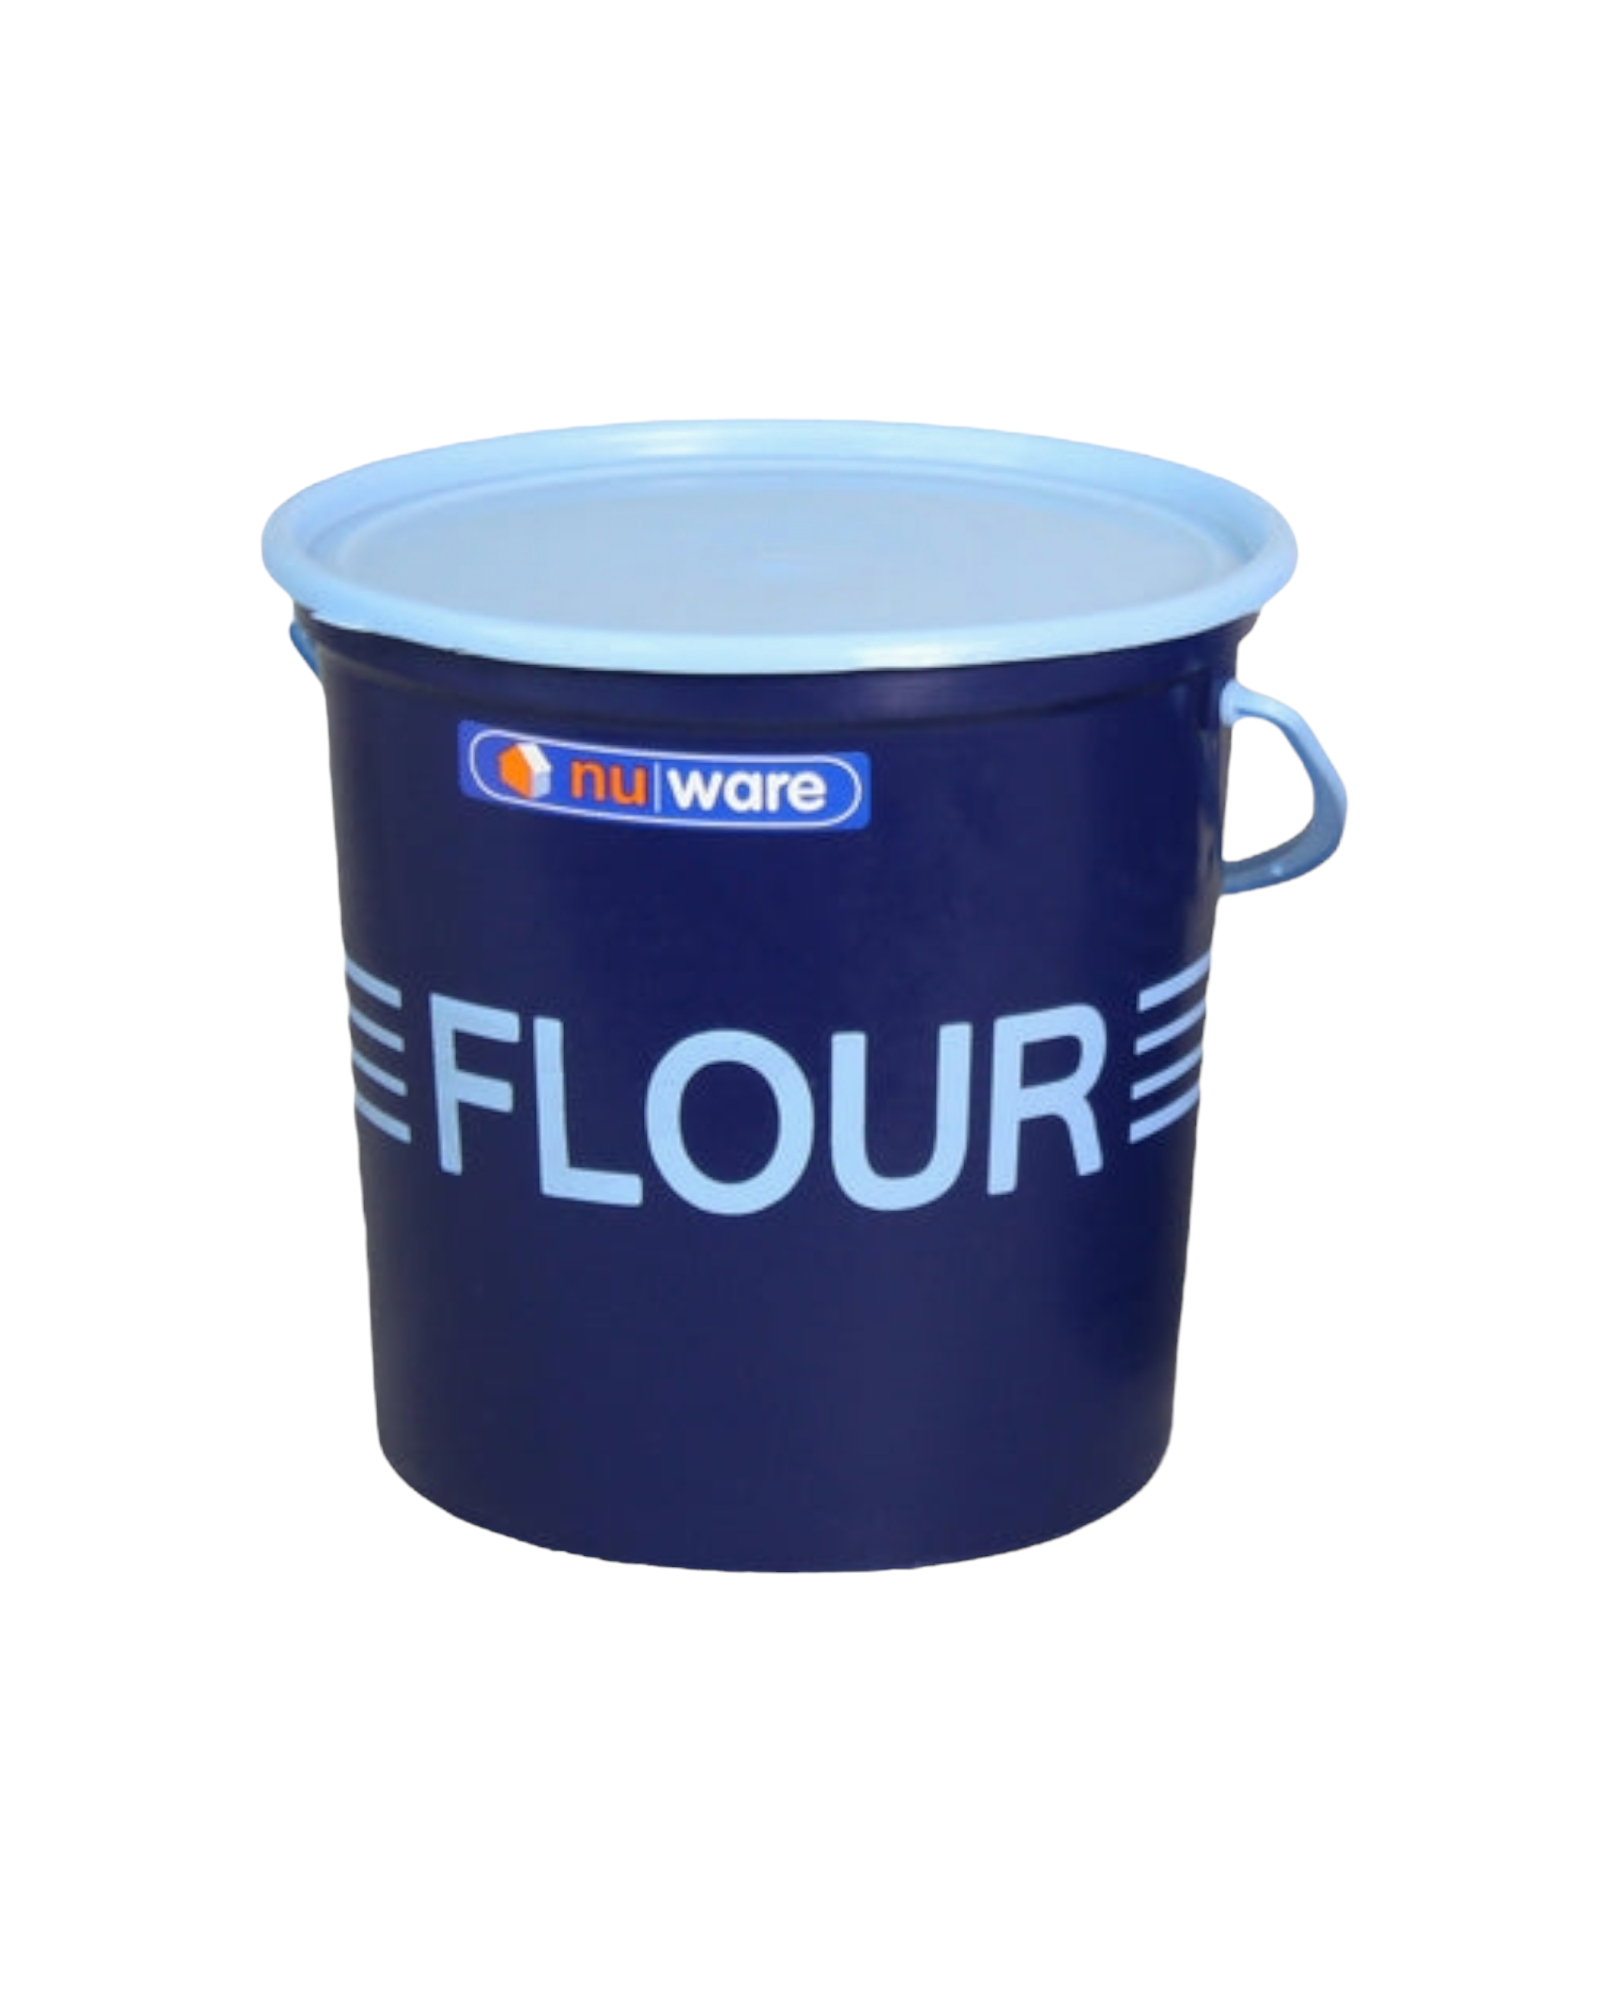 Nu ware Plastic Storage Canister Flour 10L